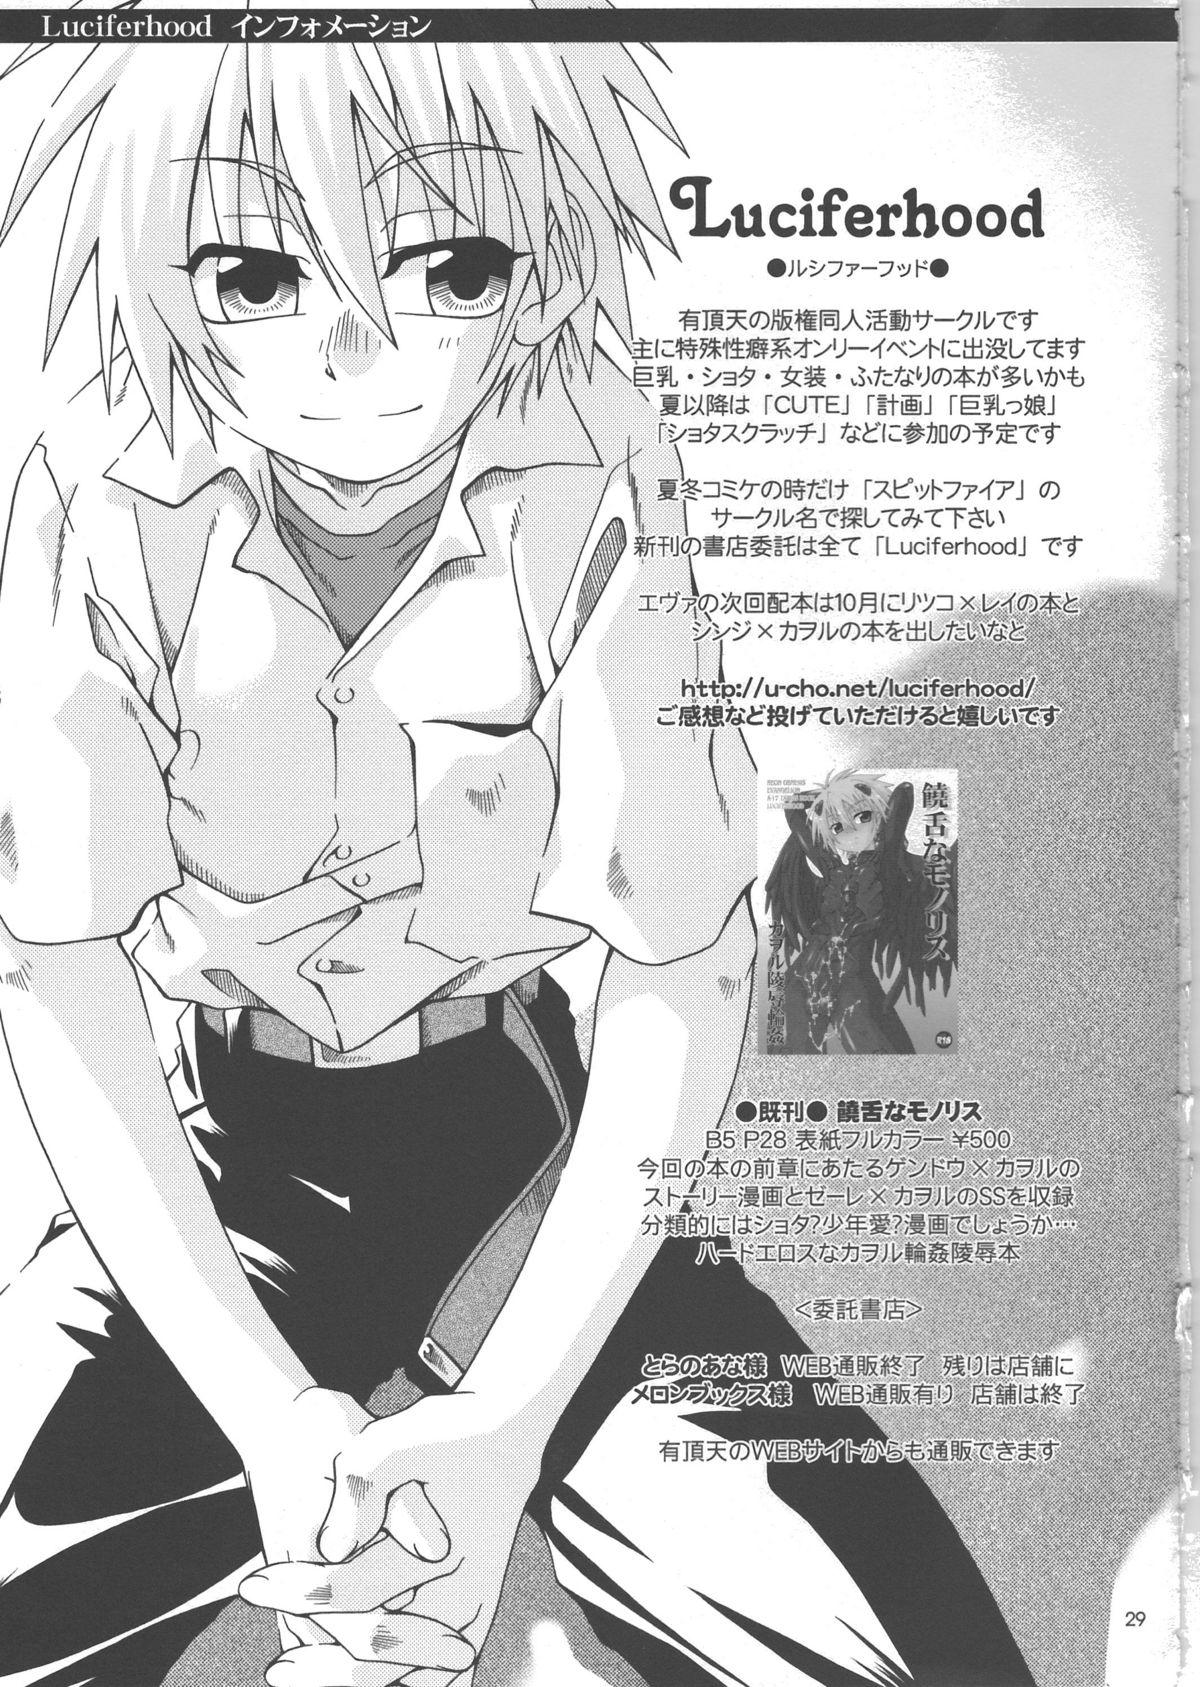 Anus Hoshi no kazu hodo - Neon genesis evangelion Teenage - Page 29